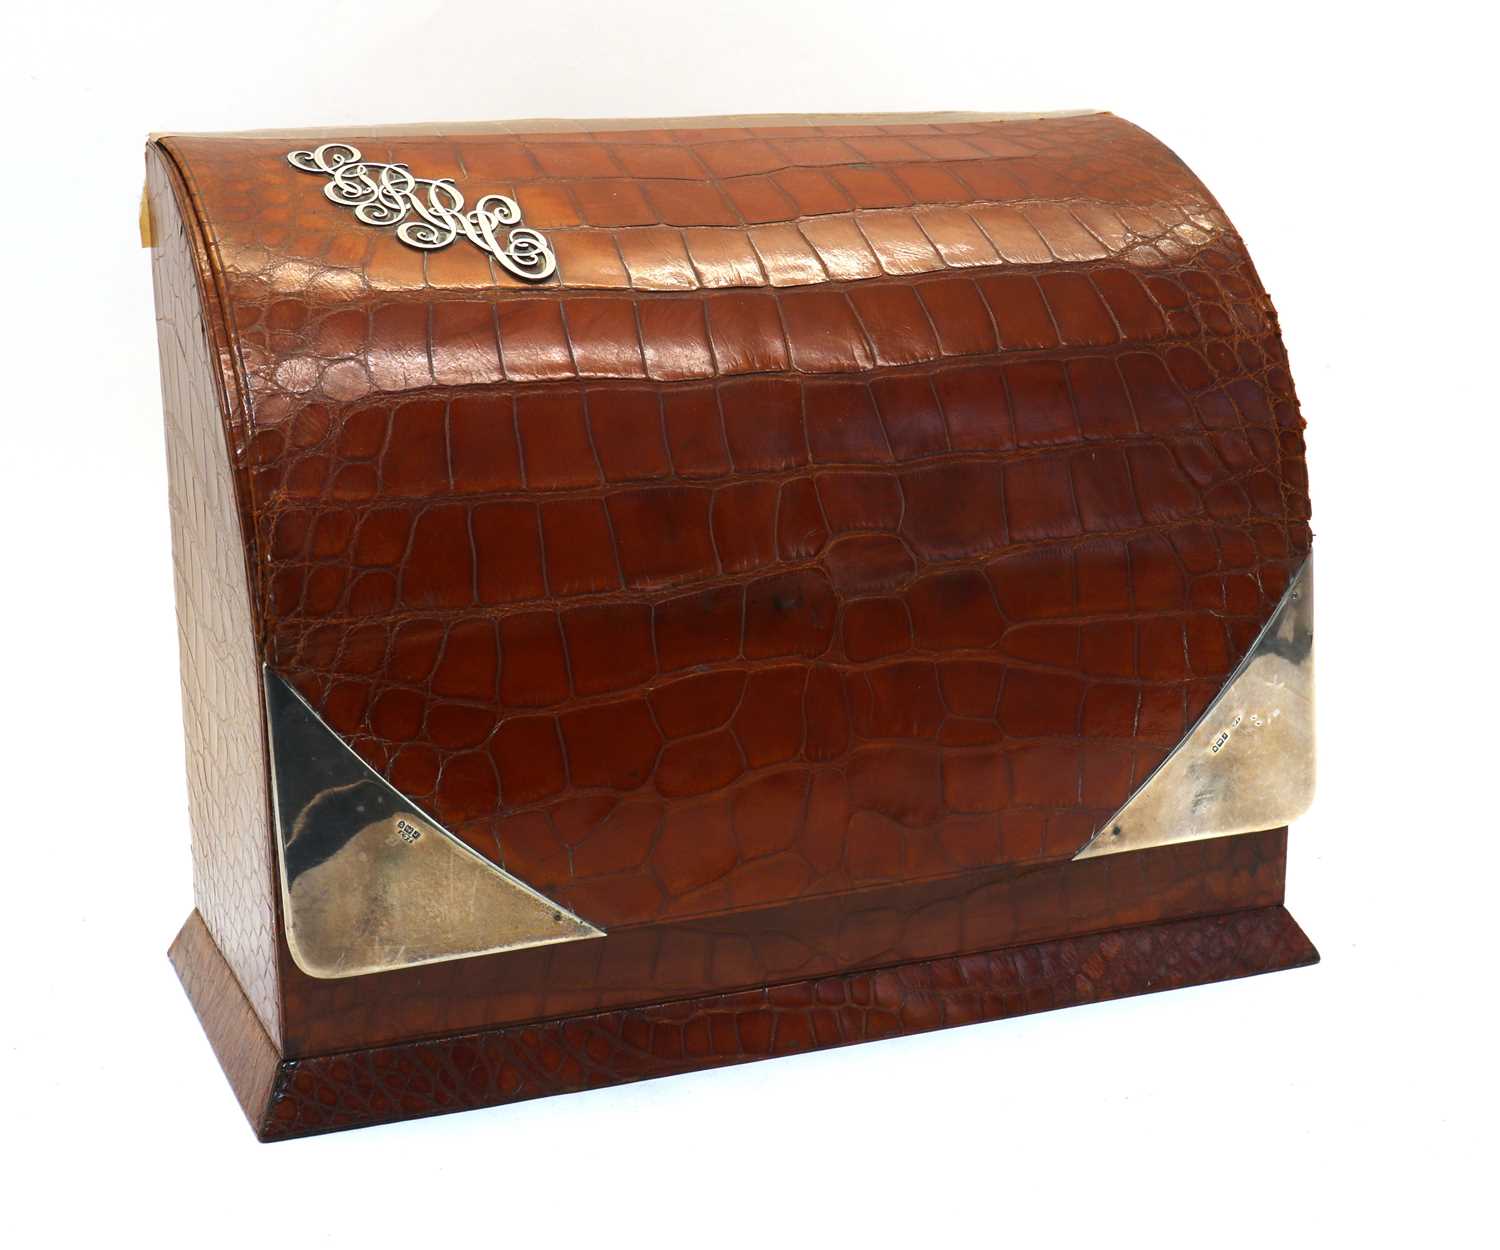 An Edwardian silver mounted crocodile skin stationery box